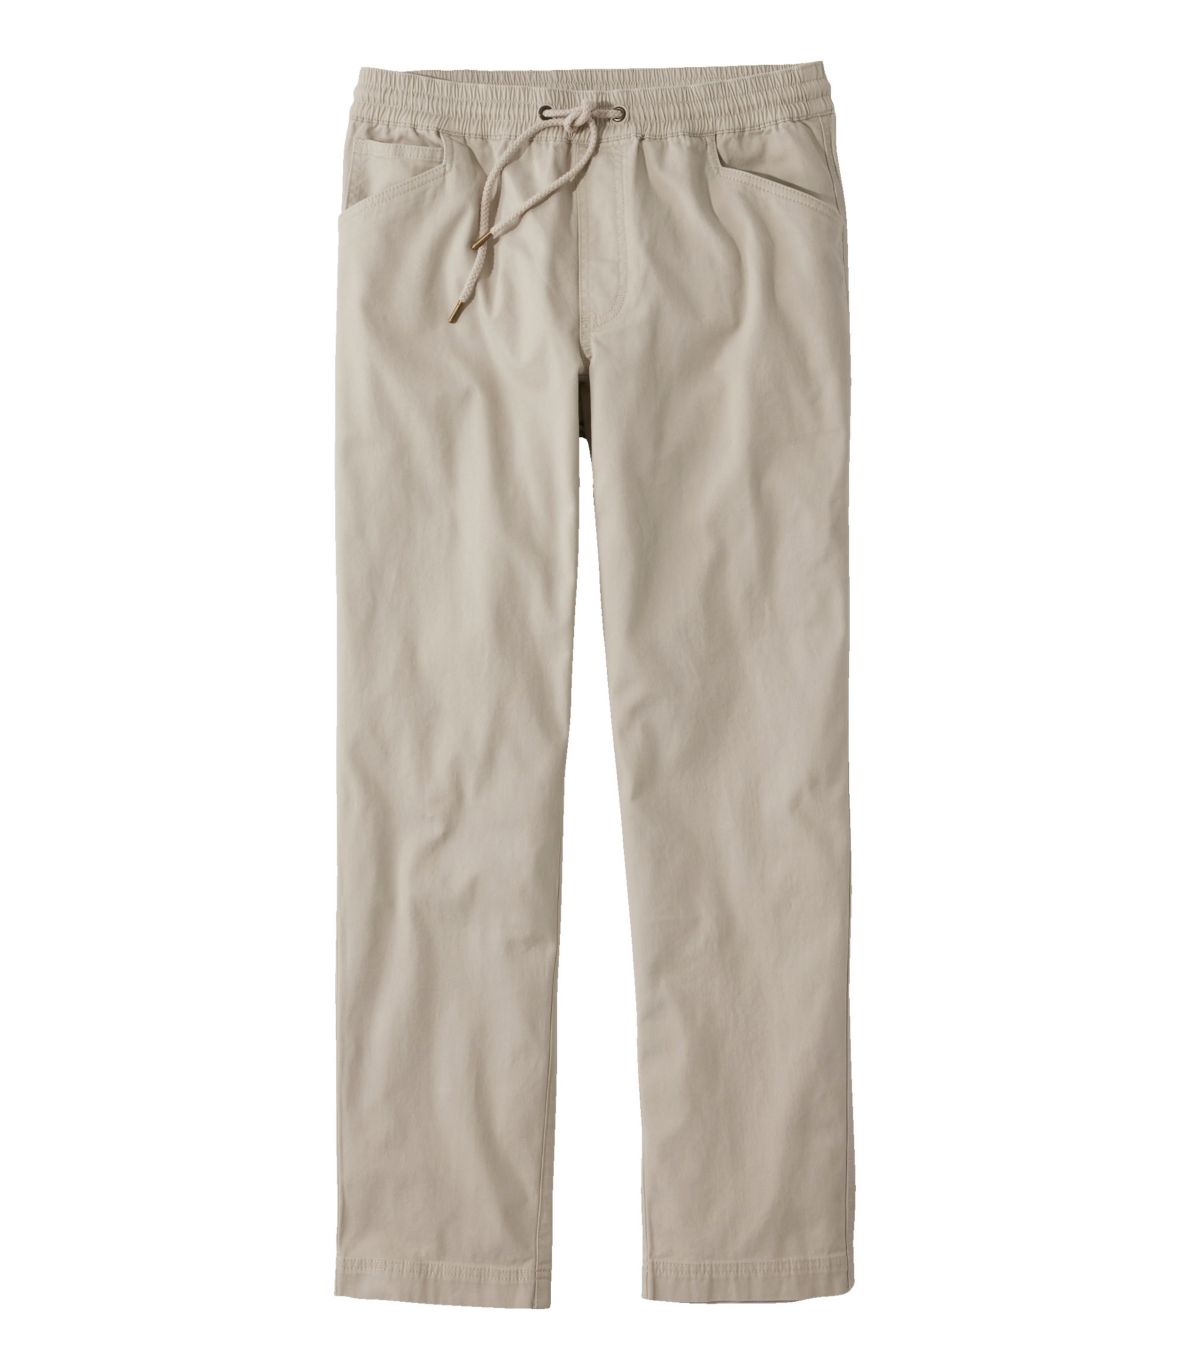 Men's BeanFlex® Canvas Pull-On Pants, Standard Fit